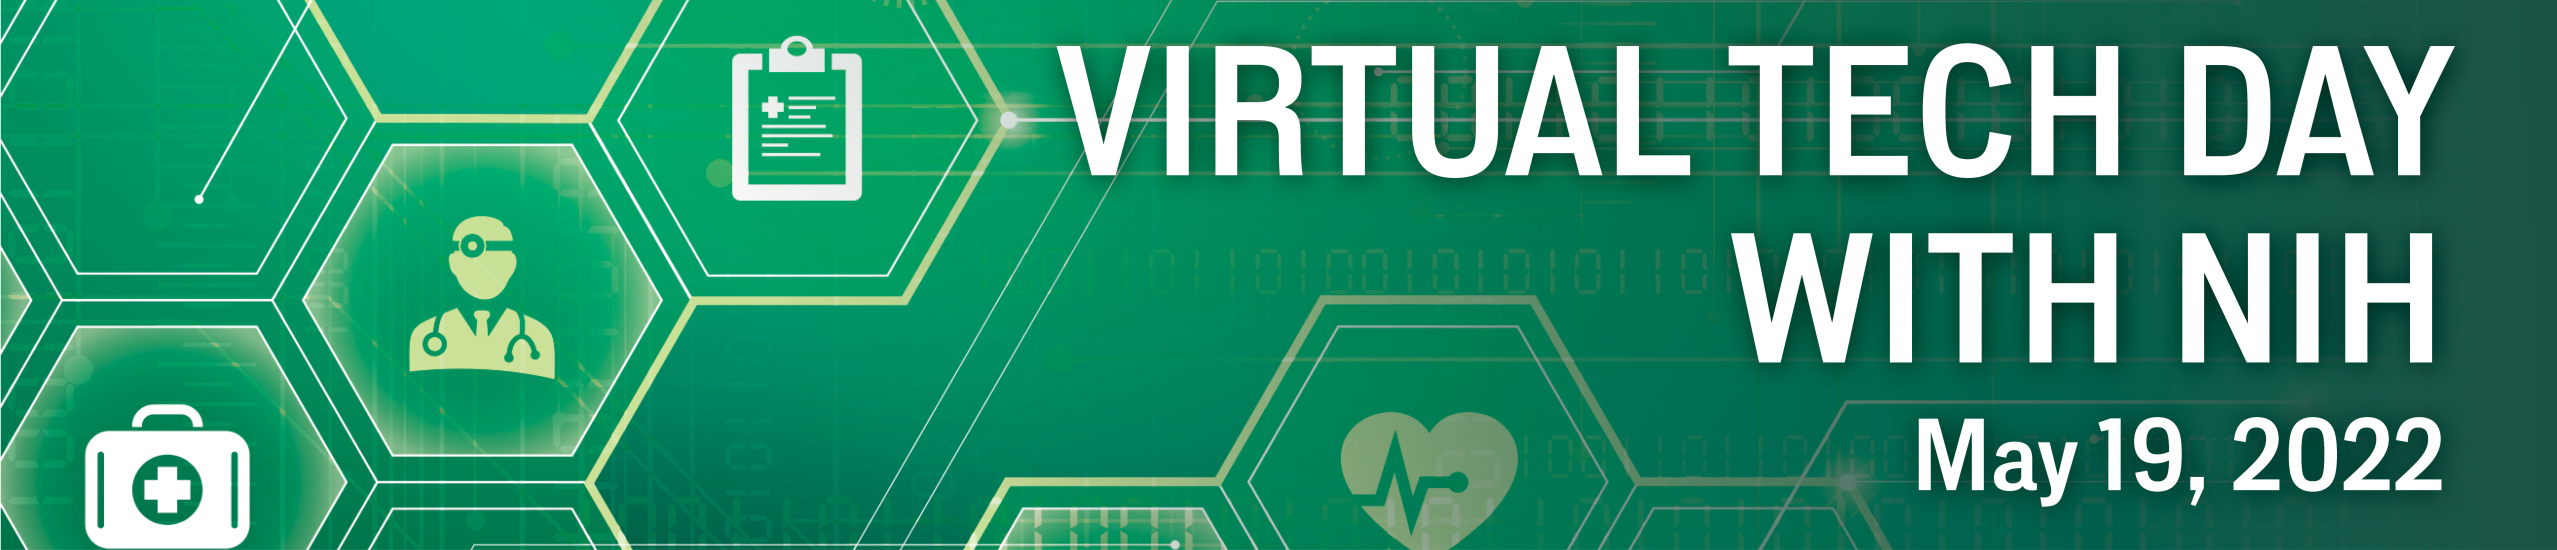 Virtual Tech Day with NIH